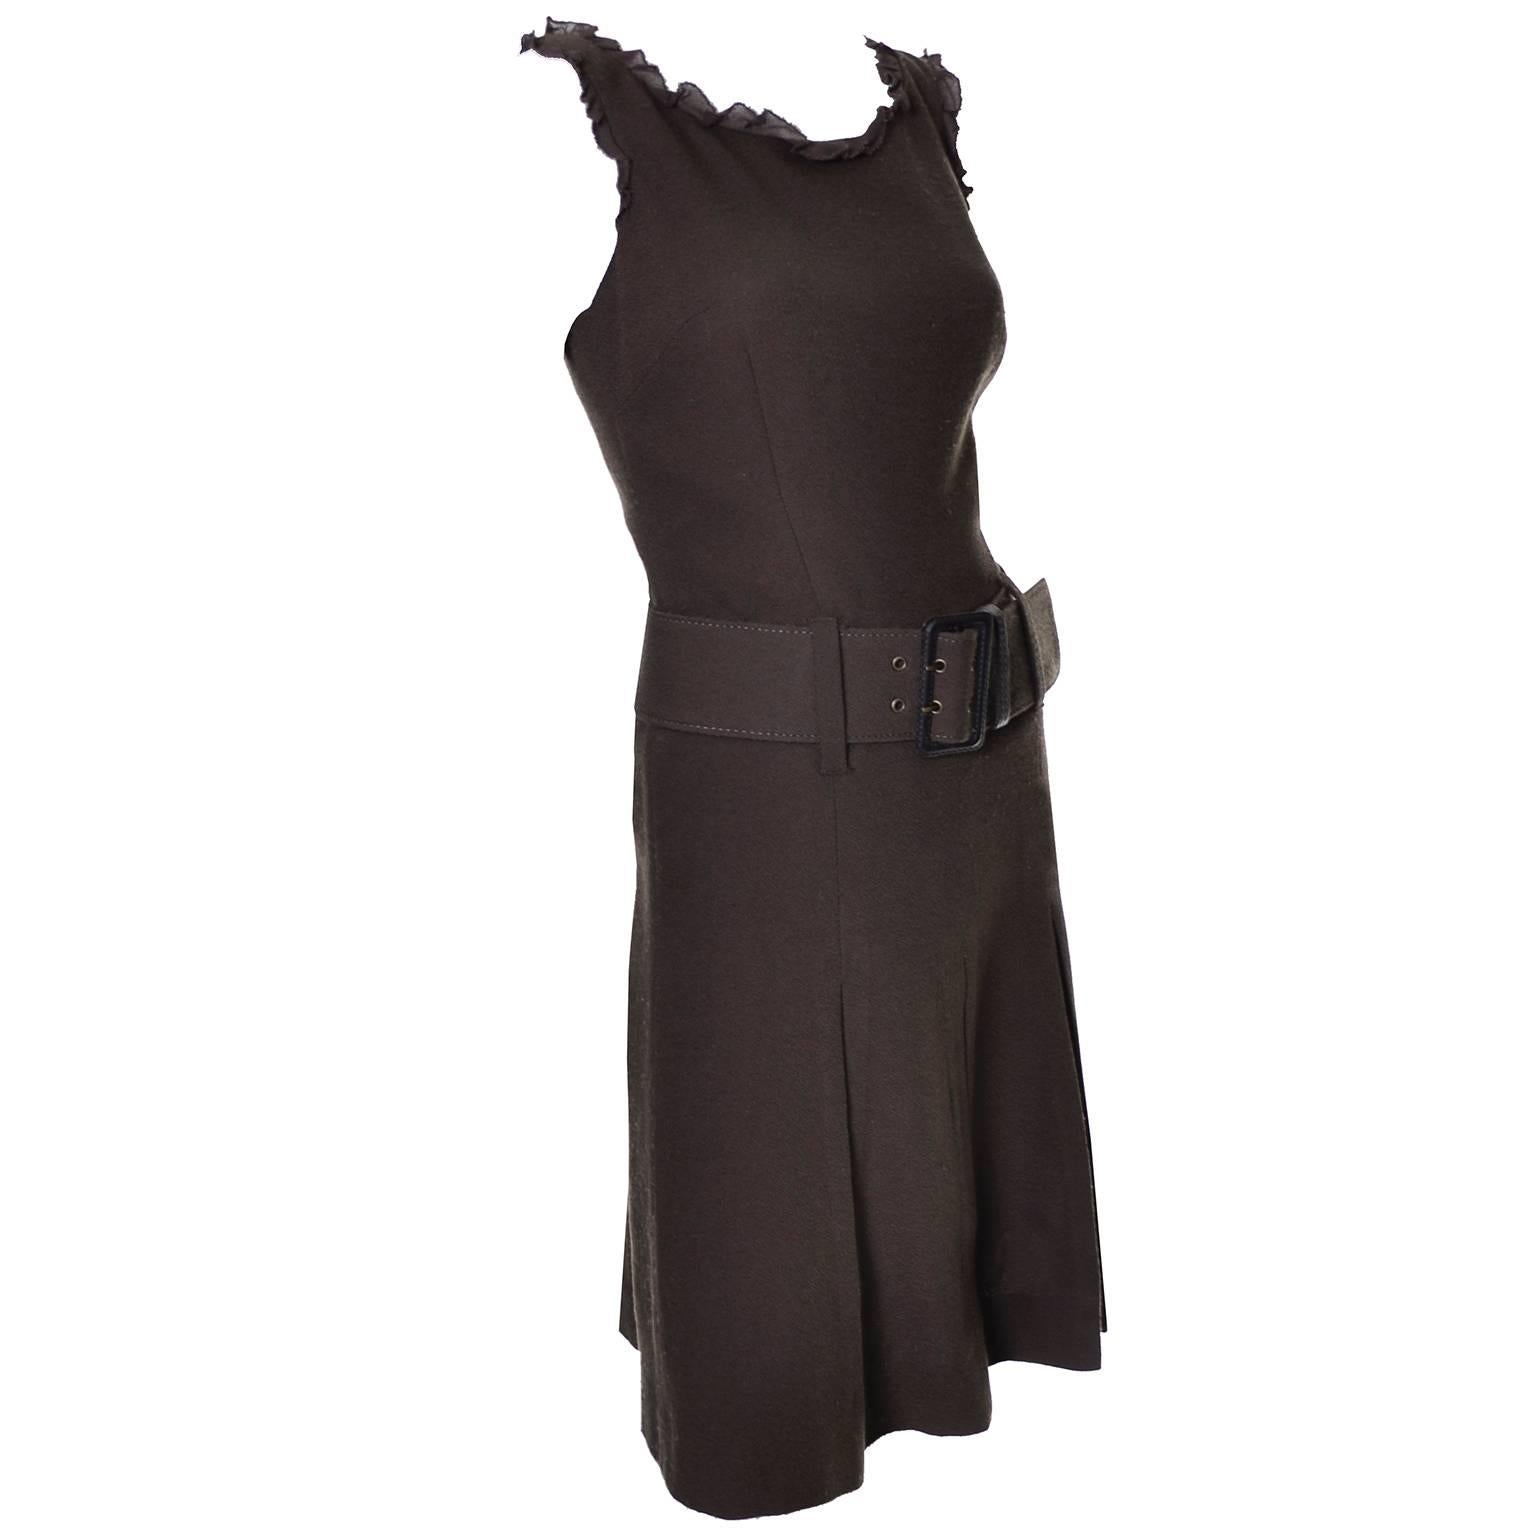 Moschino Vintage Brown Belted Dress Ruffled Trim Wide Belt 4